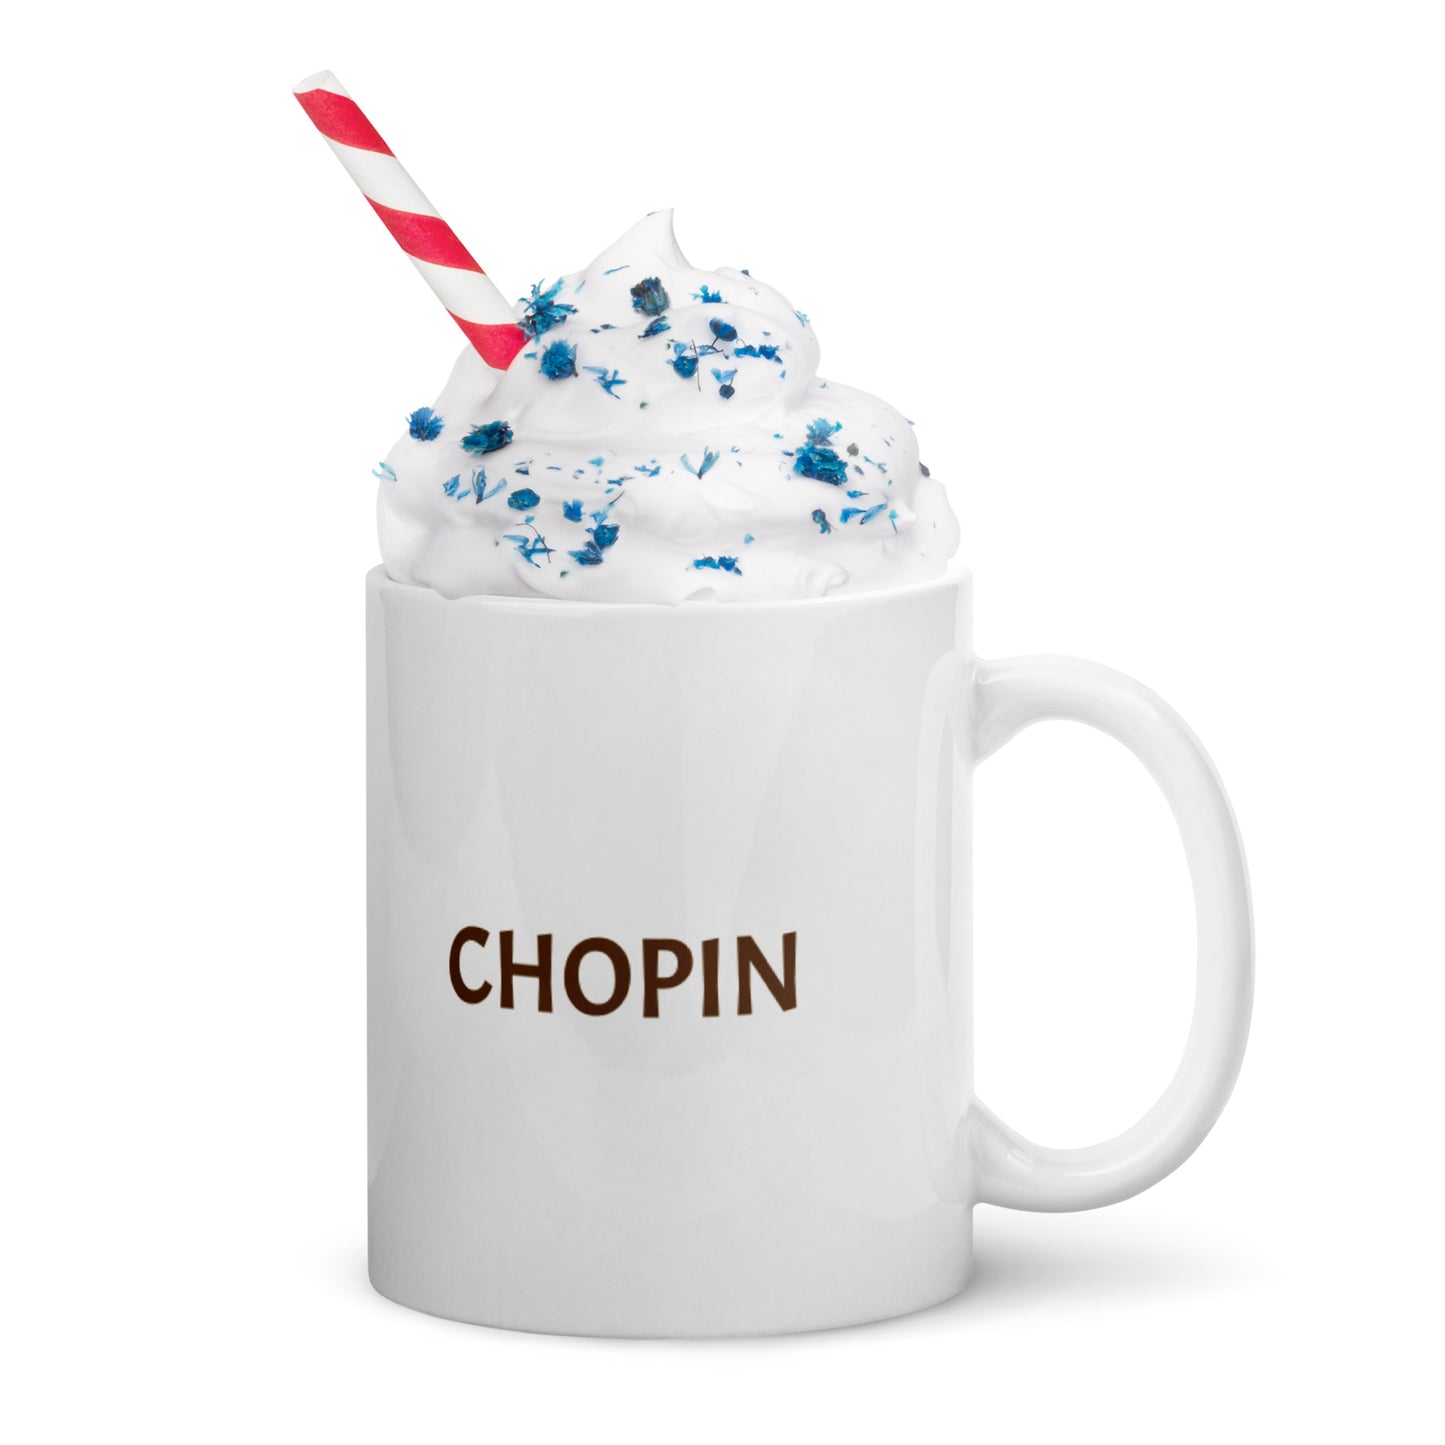 Chopin white glossy mug